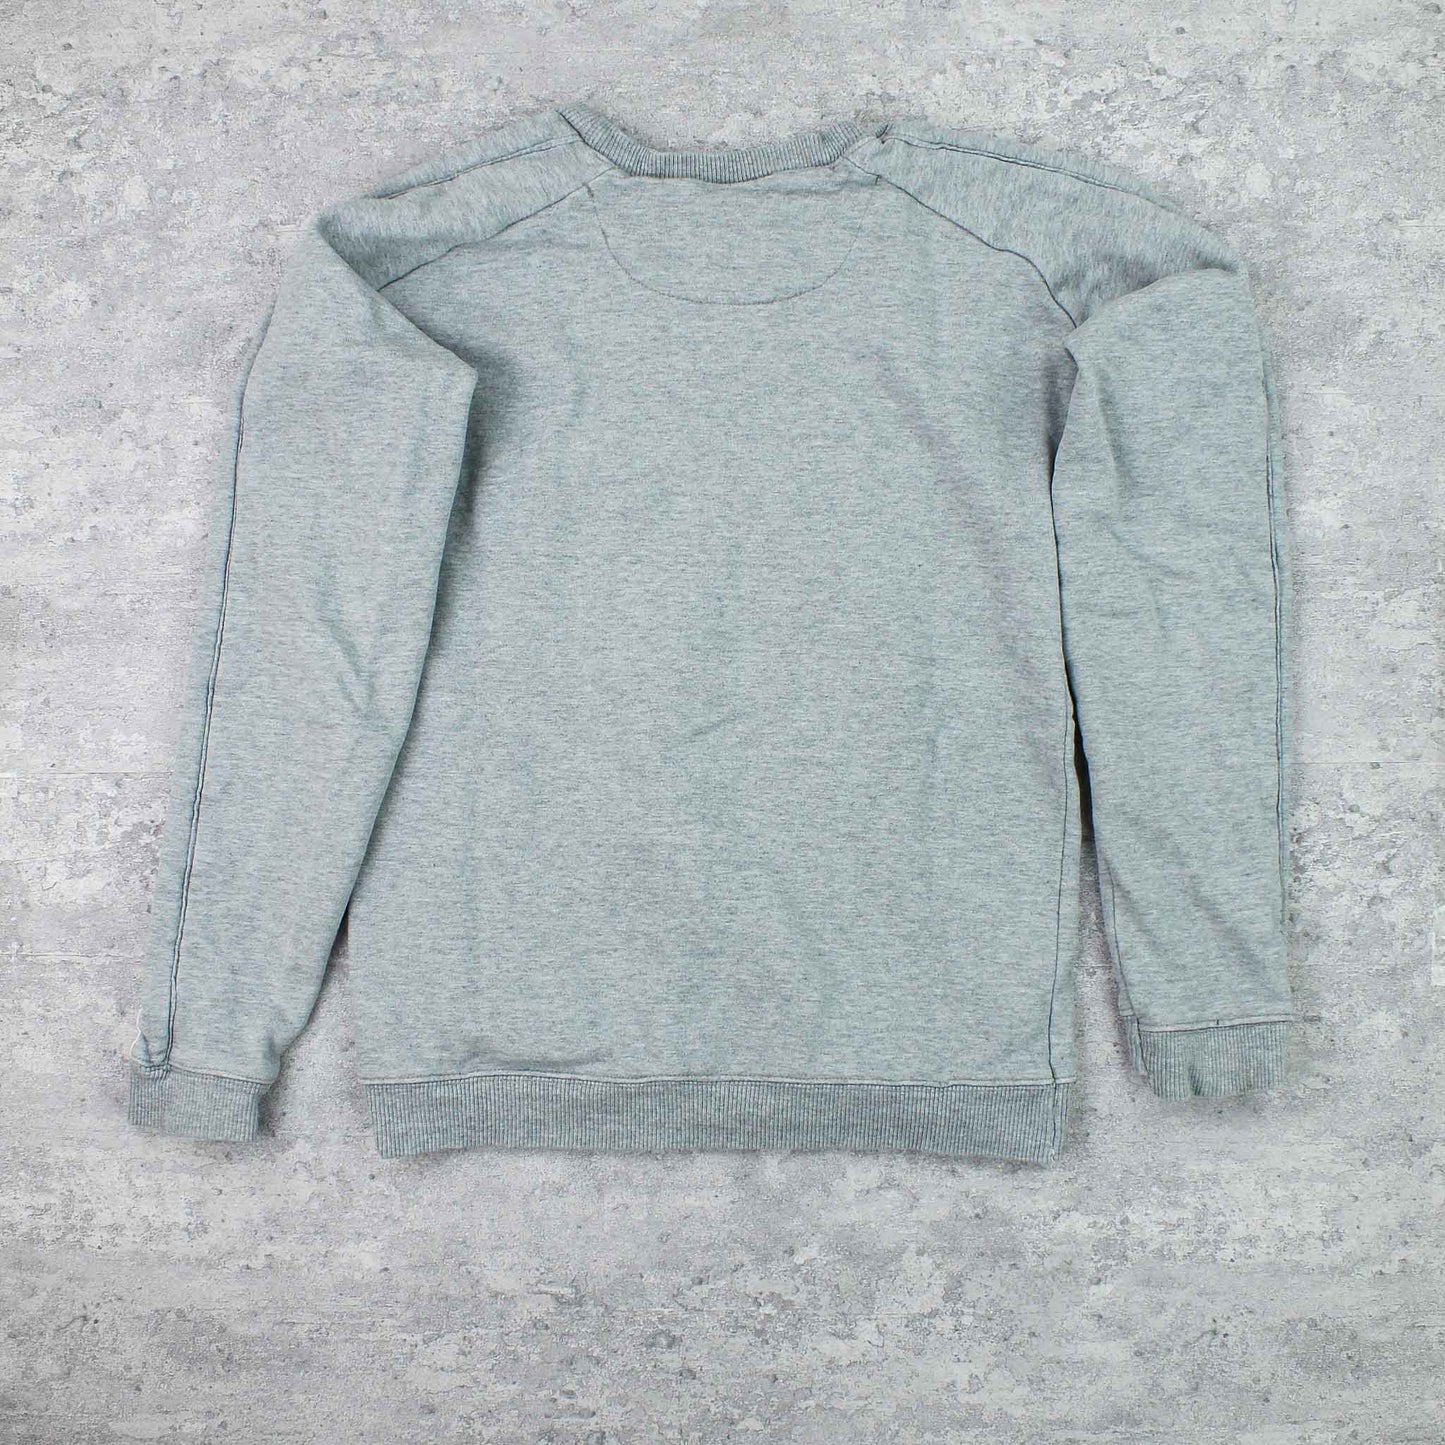 Vintage RARE Nike Logo Sweater Grau - XS